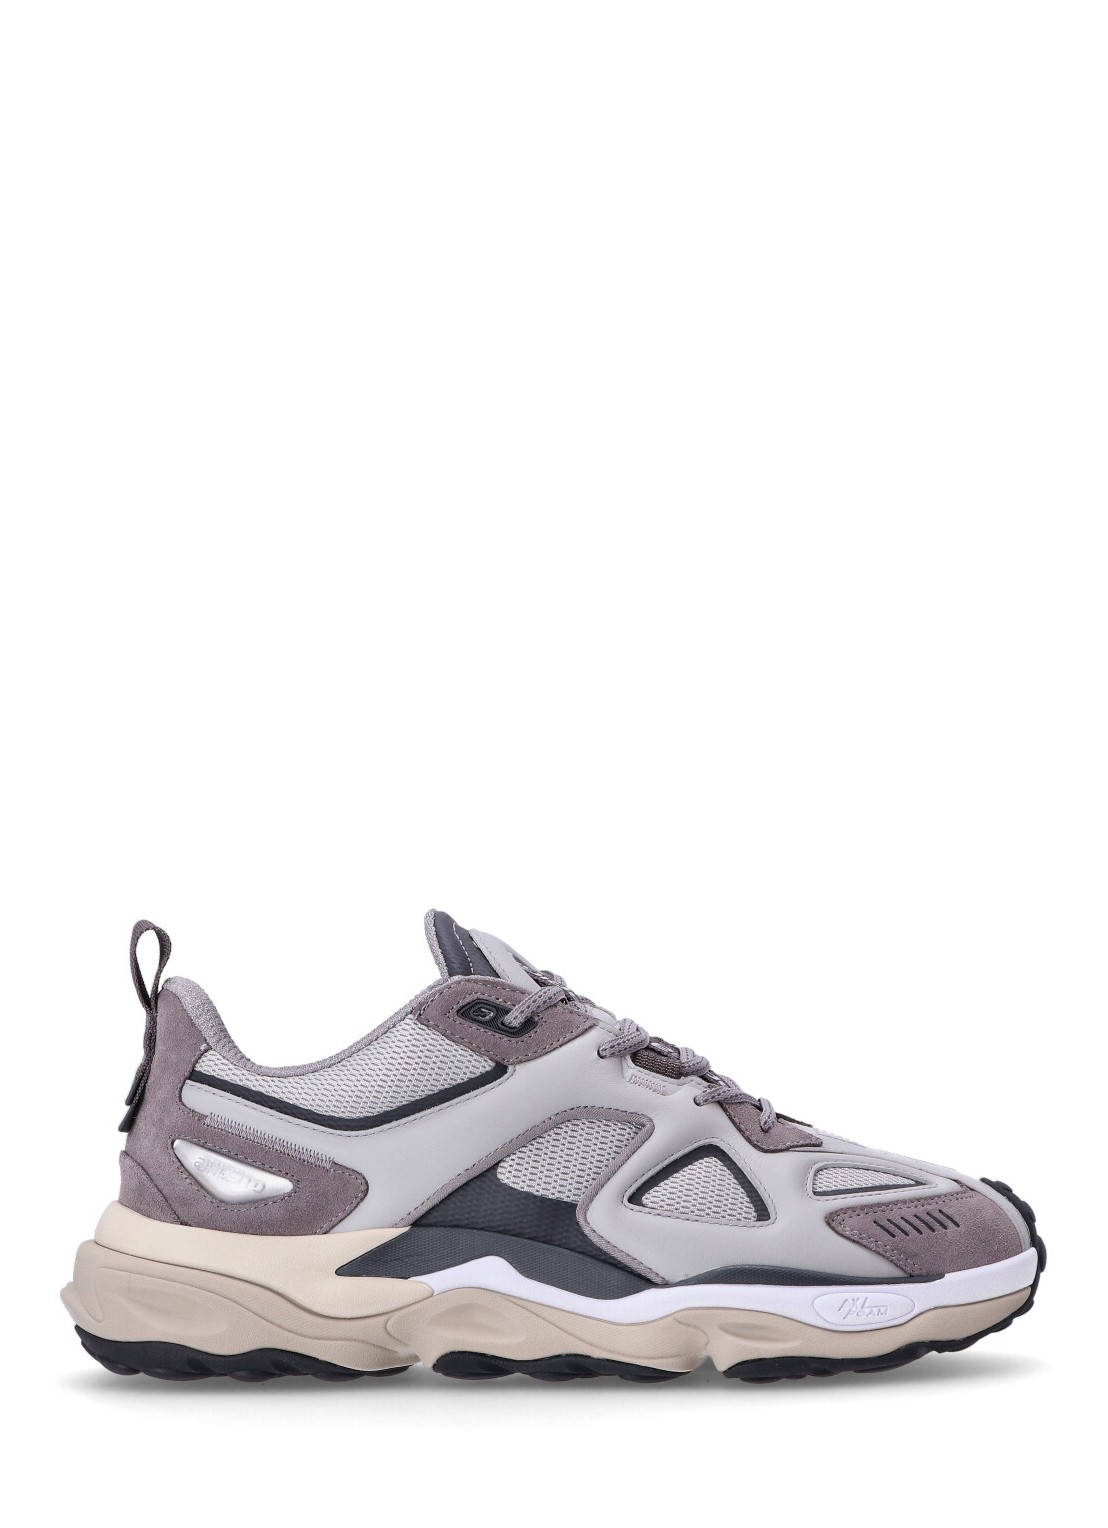 Sneaker axel arigato sneaker man satellite runner f1679002 light grey grey talla 45
 